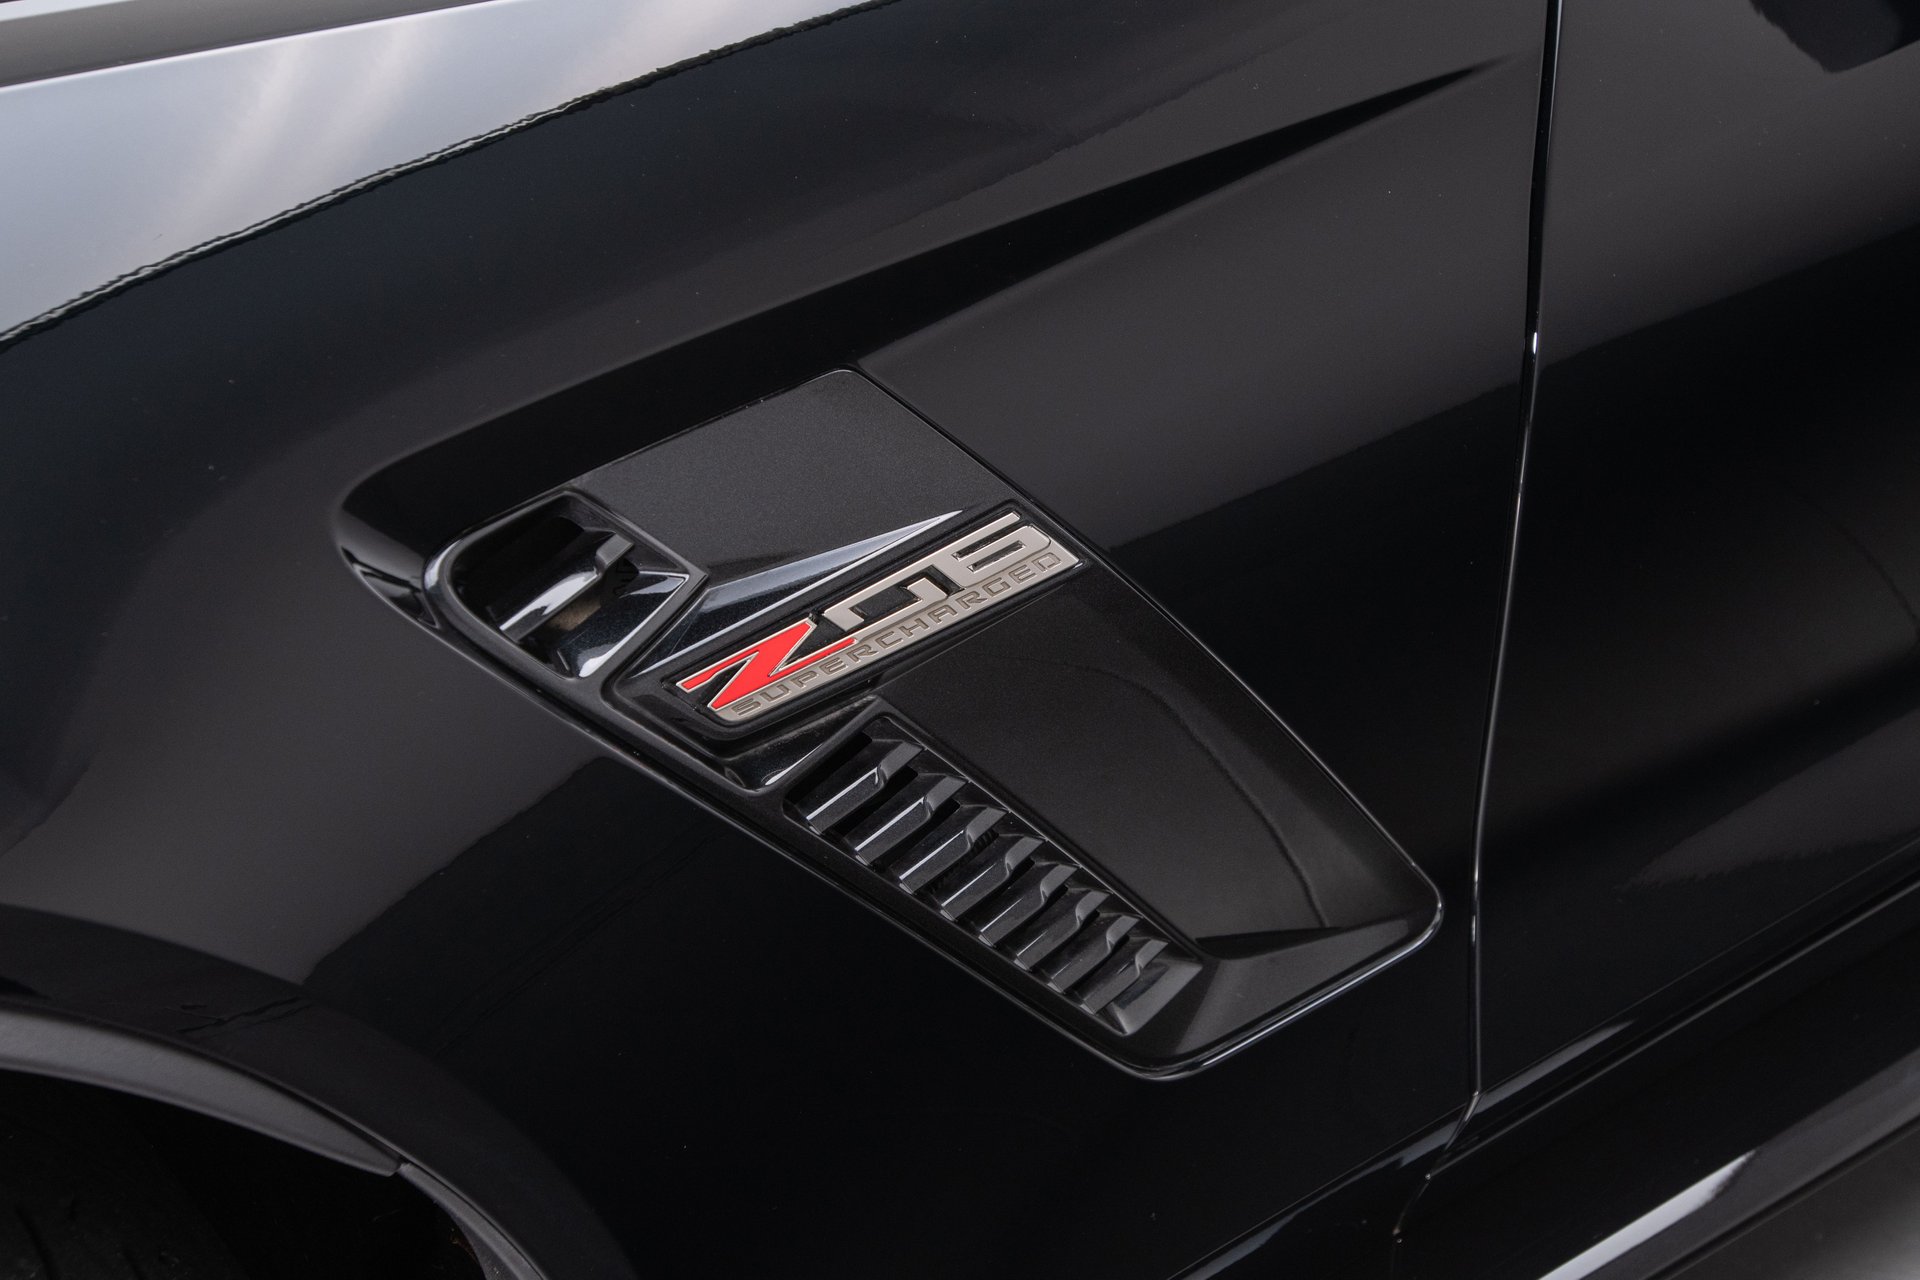 For Sale 2016 Chevrolet Corvette Z06